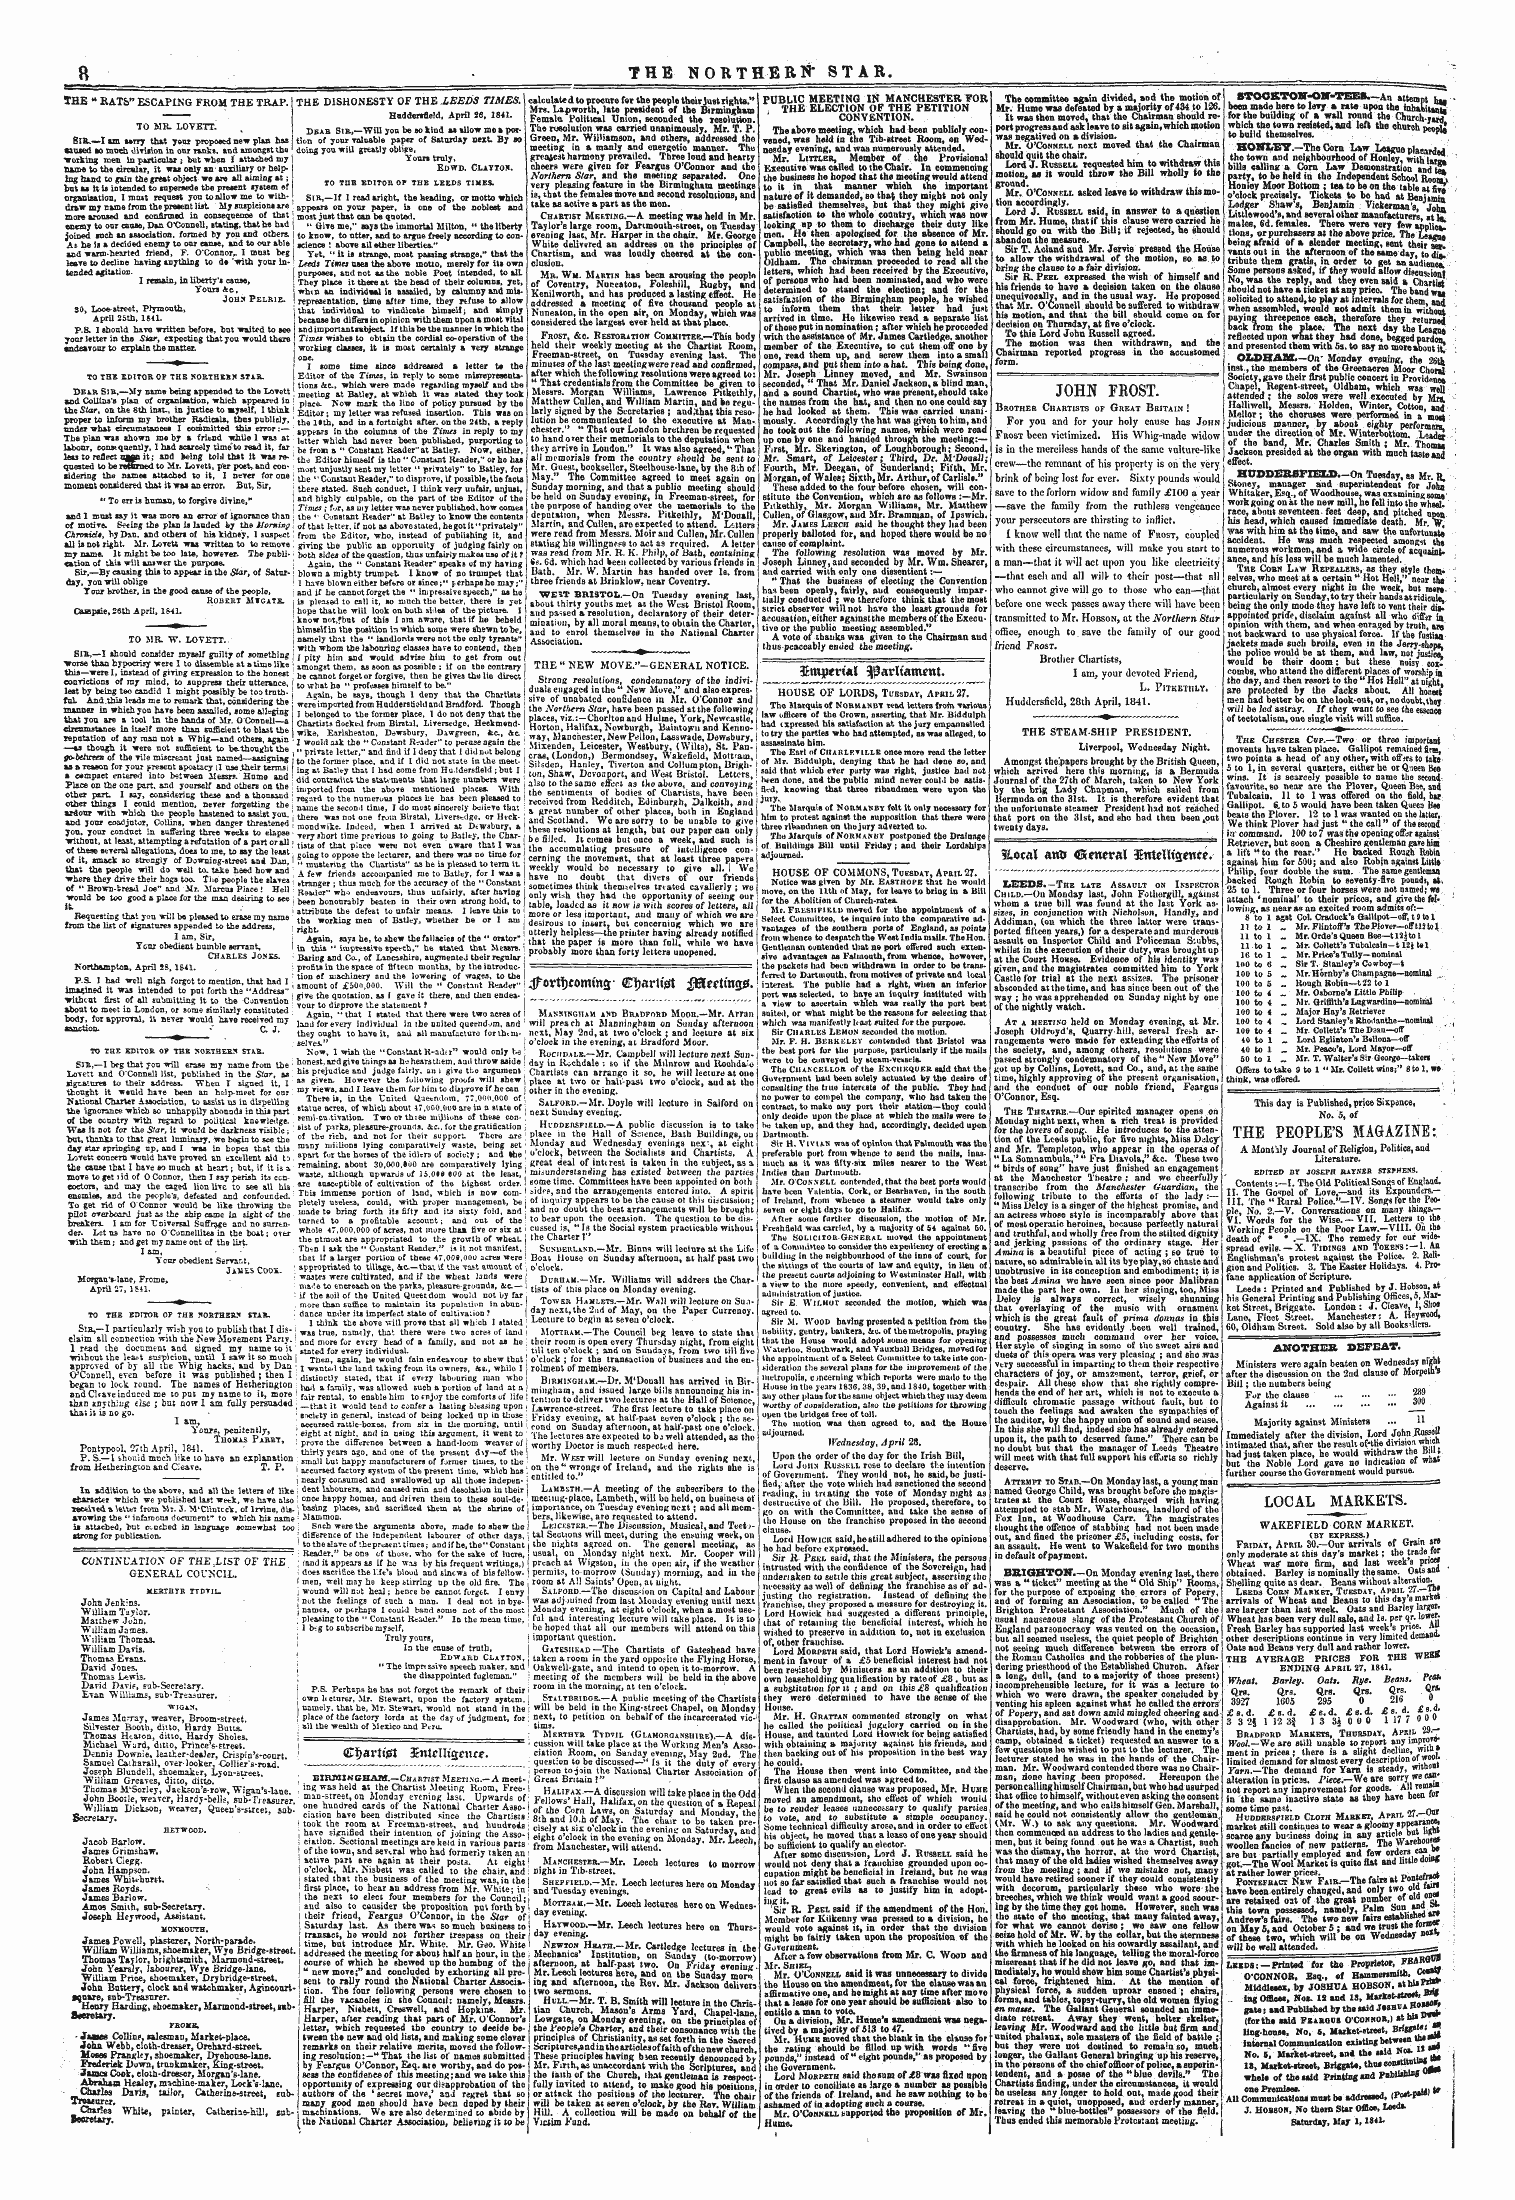 Northern Star (1837-1852): jS F Y, 3rd edition - Lmds:—Printed For Ttie Proprietor, * Ea * Q Jz